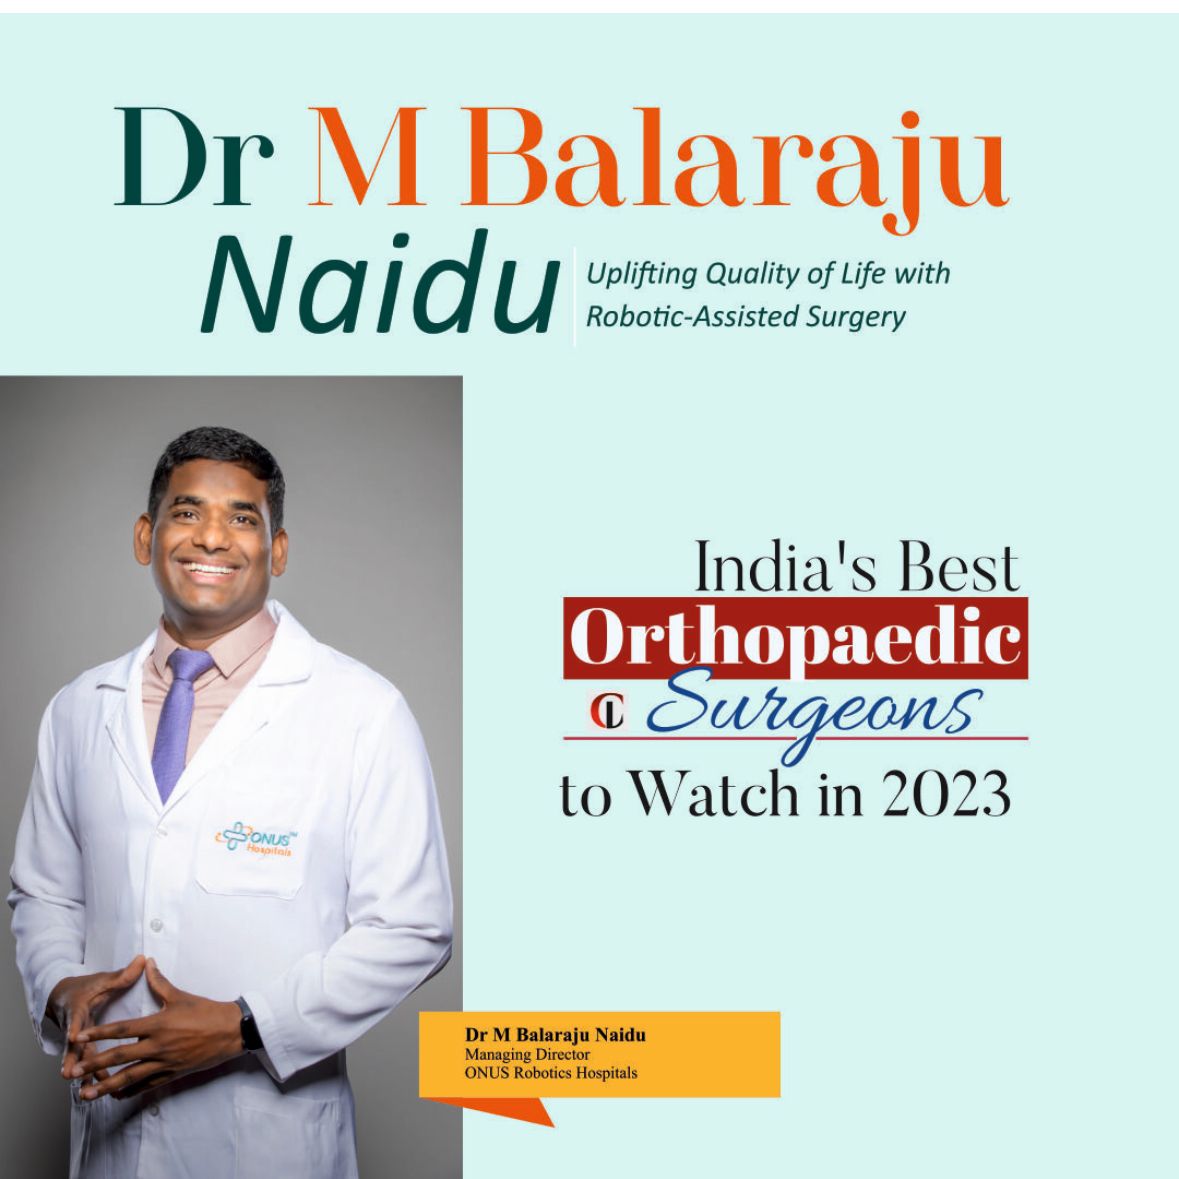 Dr M Balaraju Naidu: Uplifting Quality of Life with Robotic-Assisted Surgery